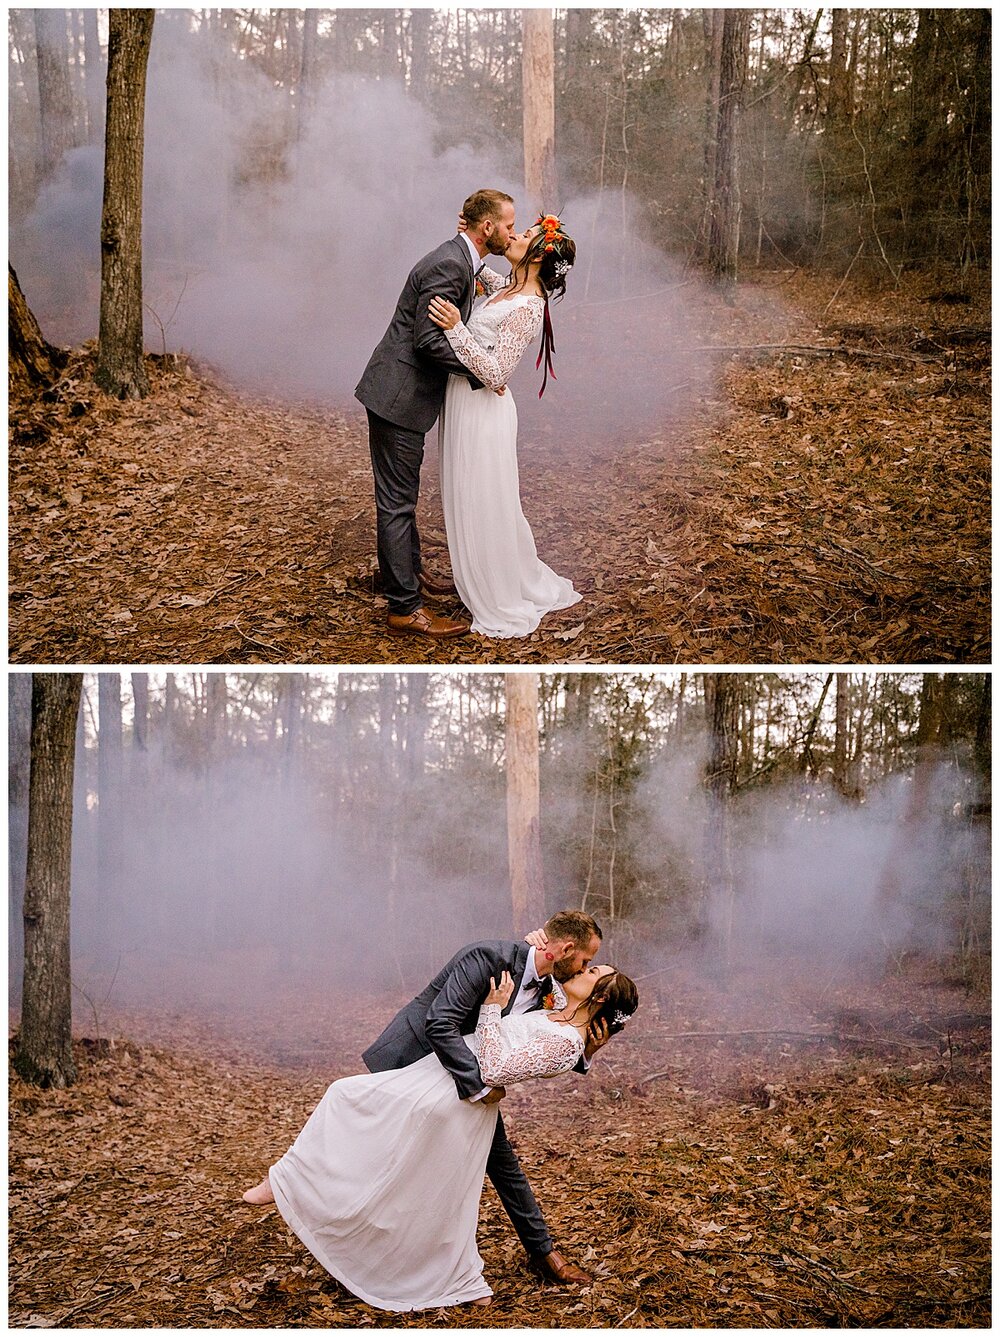  We the Romantics Wedding Photography www.wetheromantics.com 